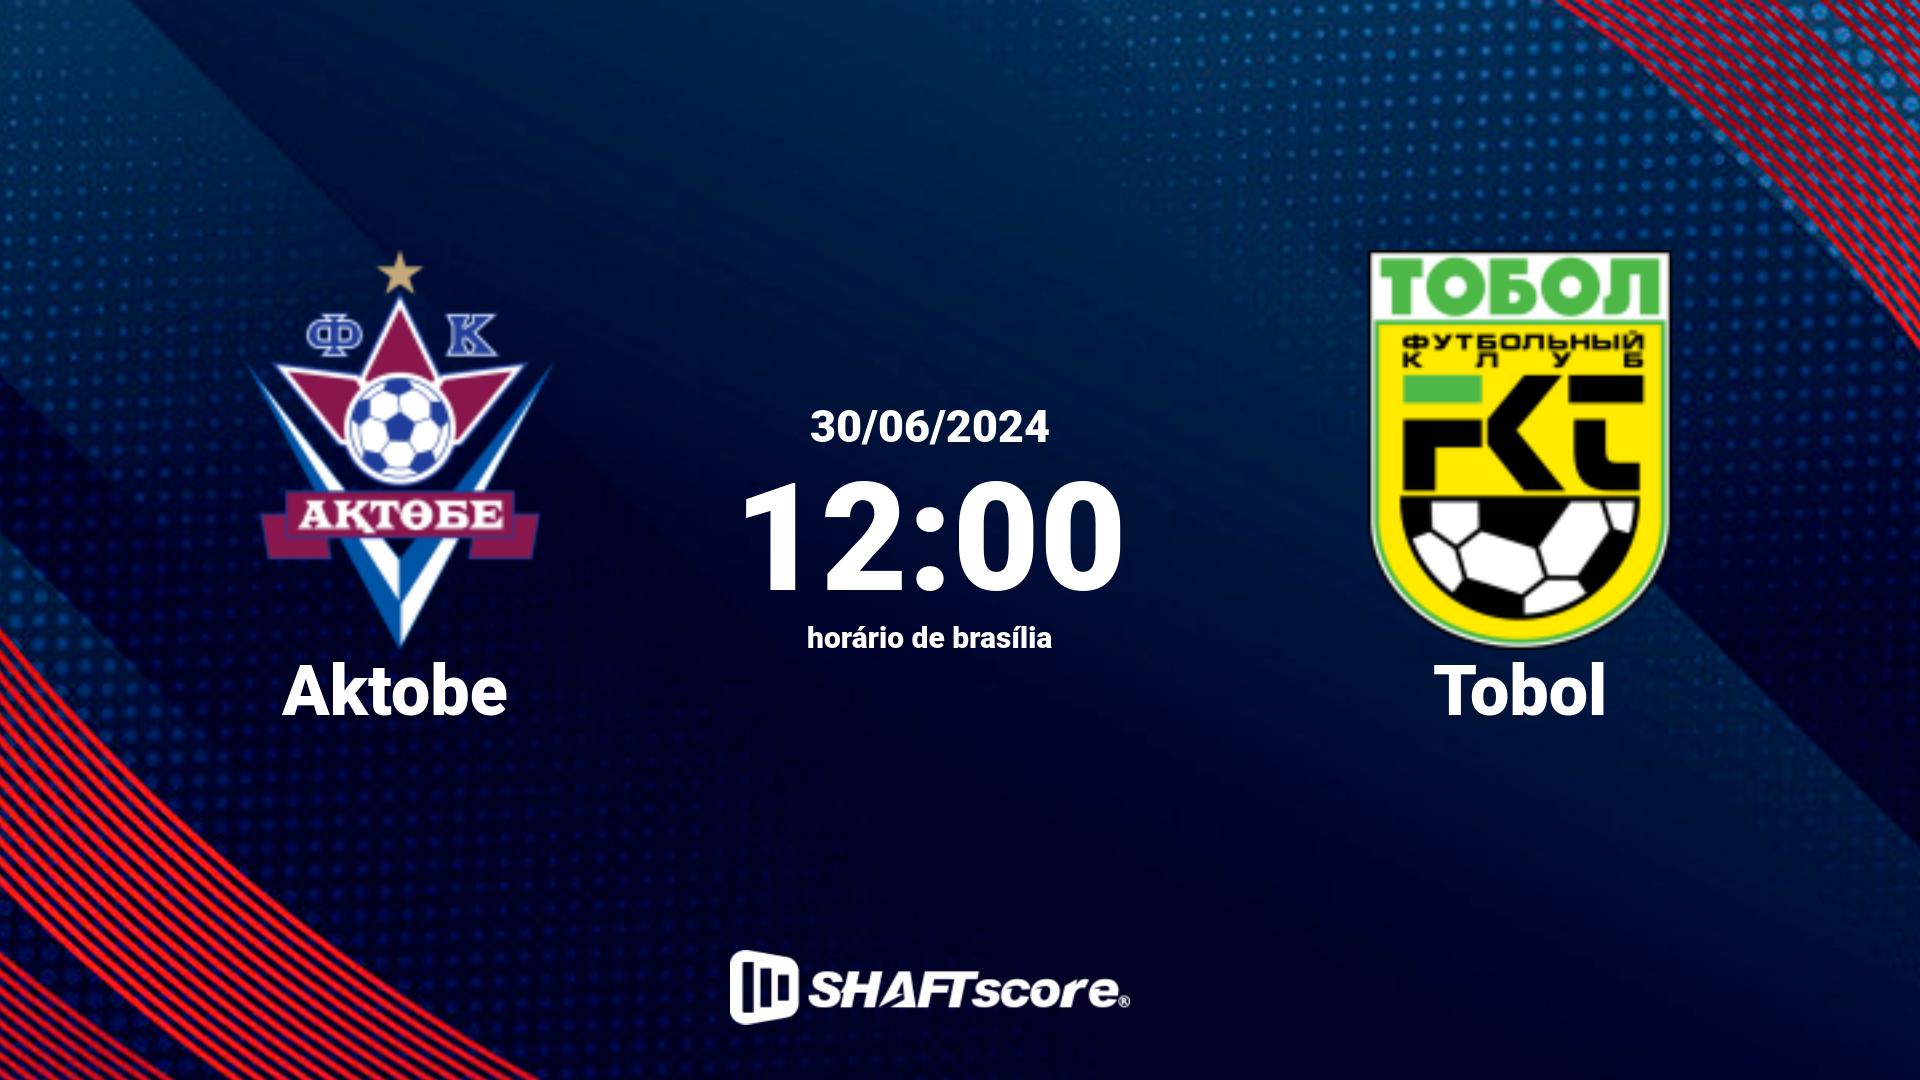 Estatísticas do jogo Aktobe vs Tobol 30.06 12:00